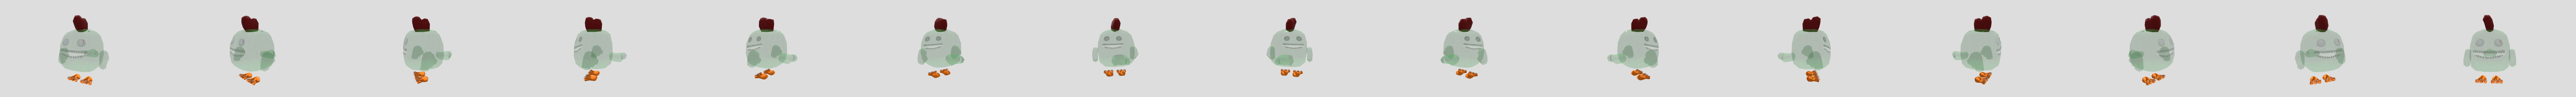 Chicken Gun- Jumbo Josh - Download Free 3D model by makskolot7  (@makskolot7) [f98acff]